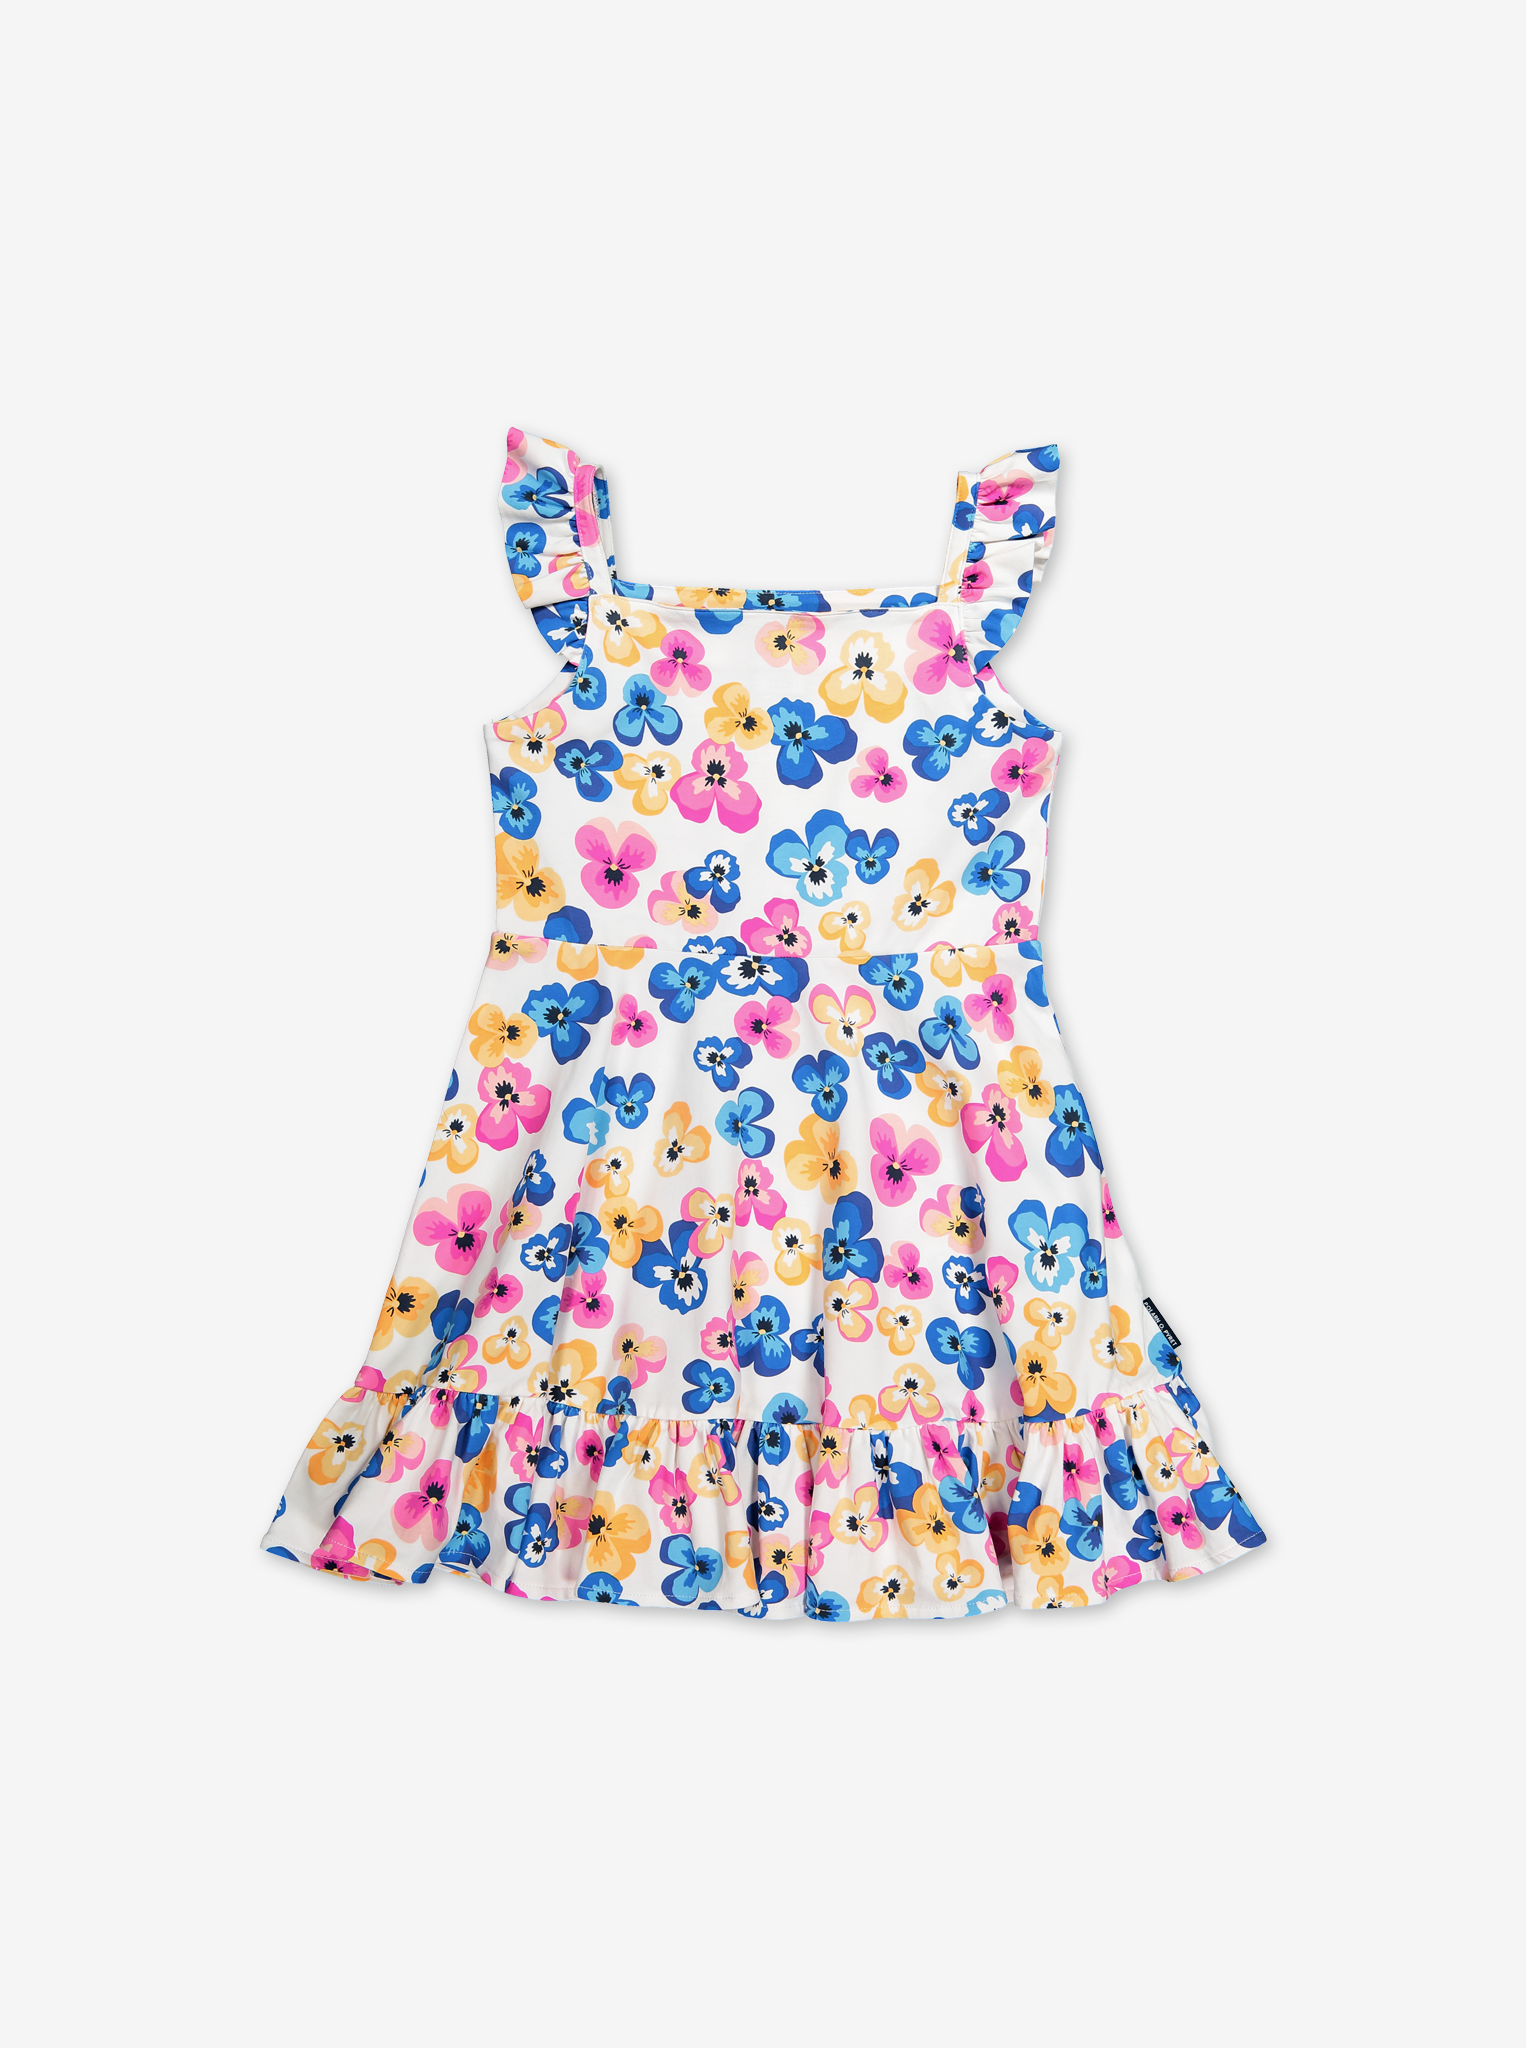 Floral Print Dress-Girl-1-6y-White